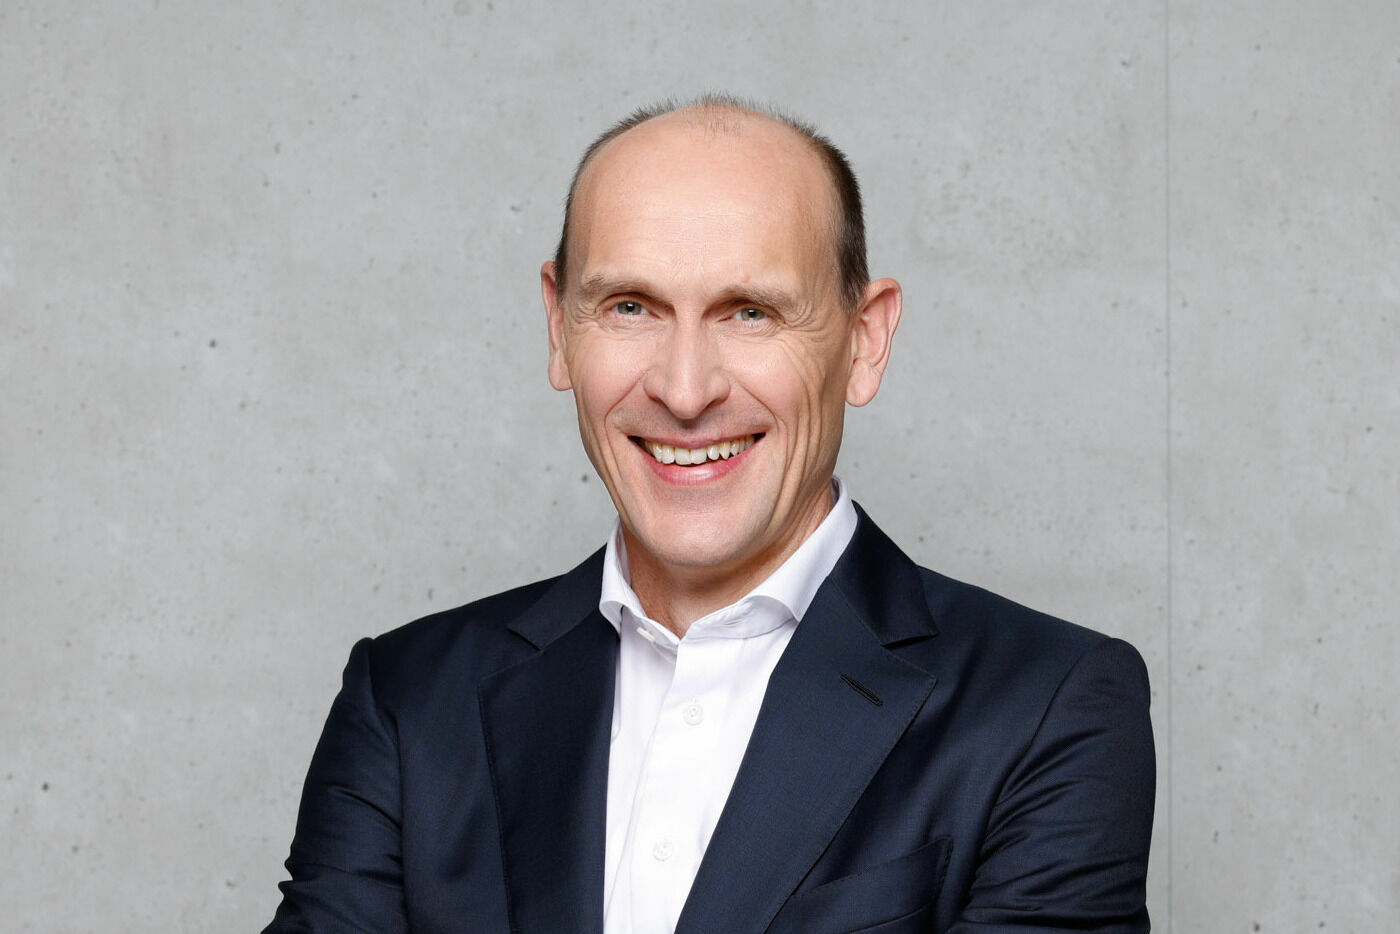 Ralf Brandstätter, Member of the board of Volkswagen AG for China